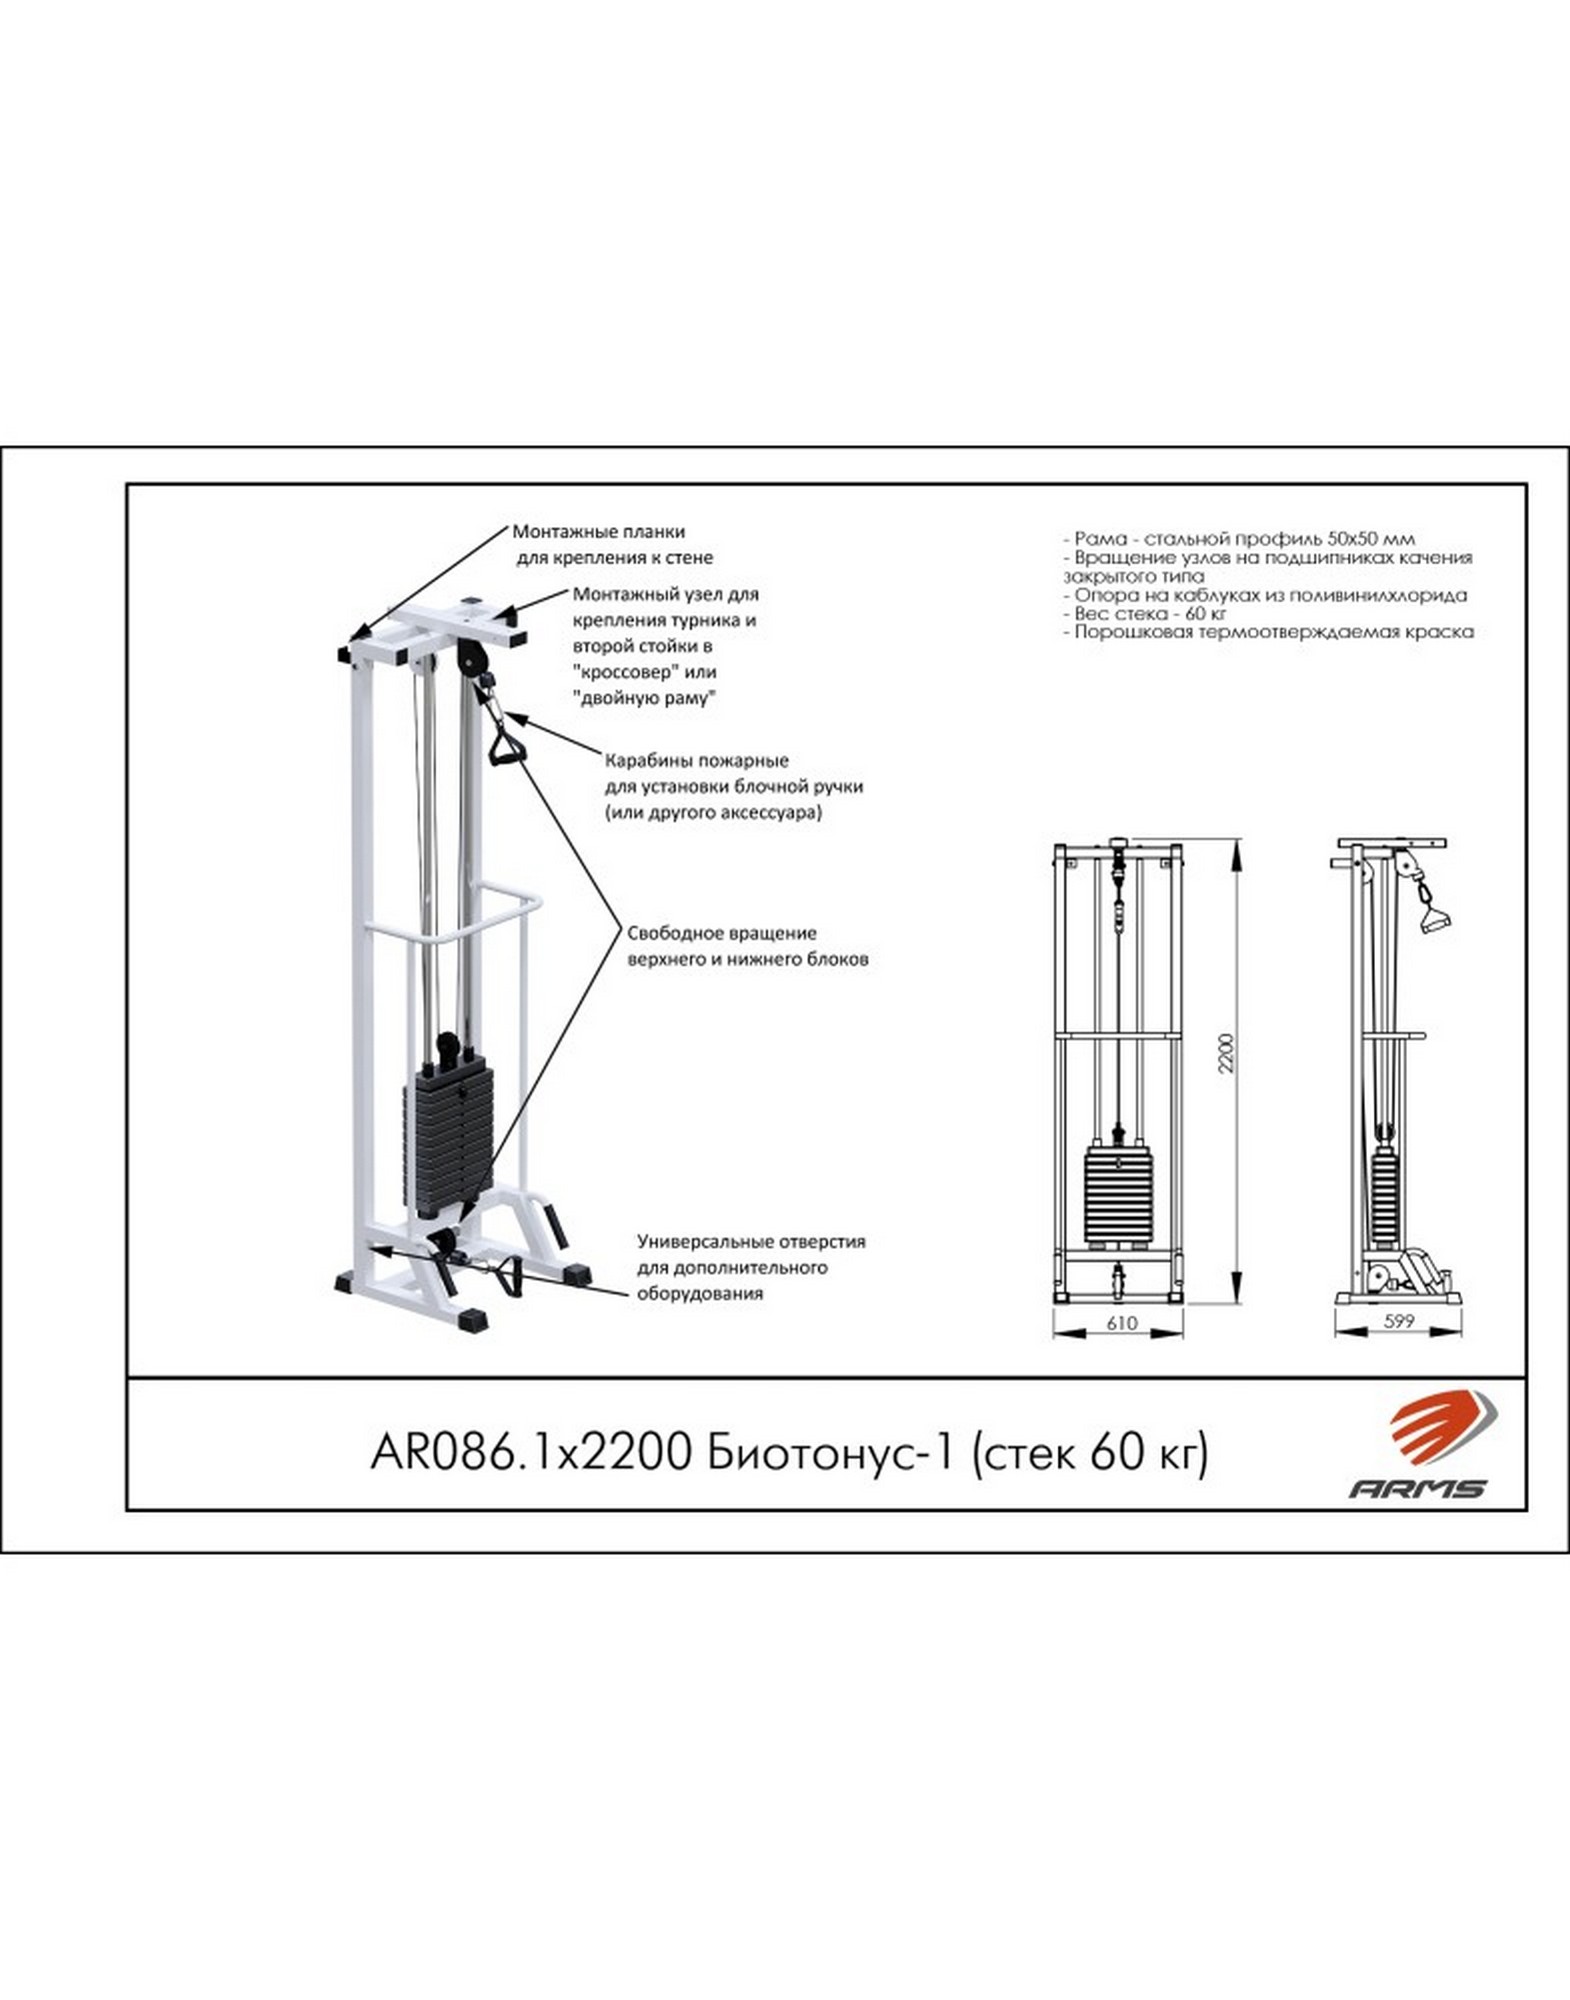 Блочная стойка ARMS Биотонус-1 (стек 60кг) AR086.1х2200-60 1570_2000